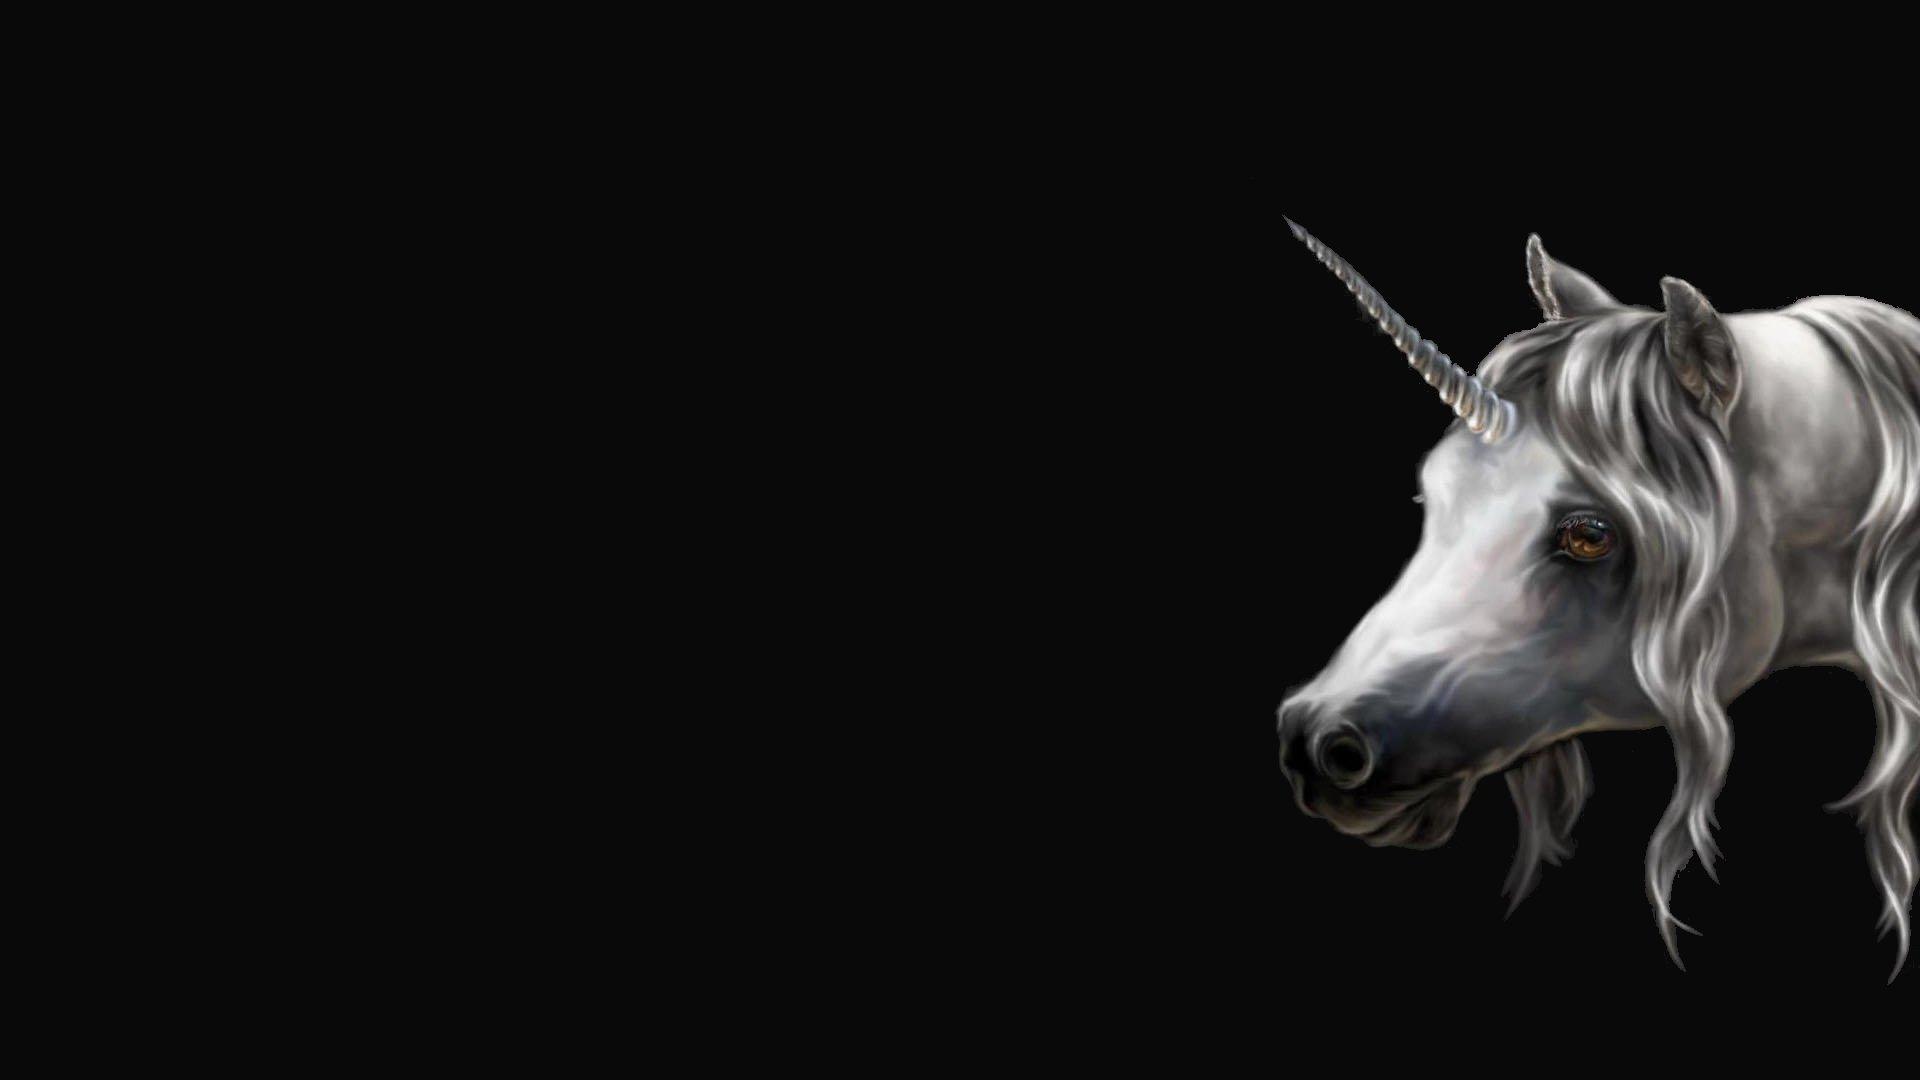 Unicorn wallpaper 1920x1080 Full HD (1080p) desktop background